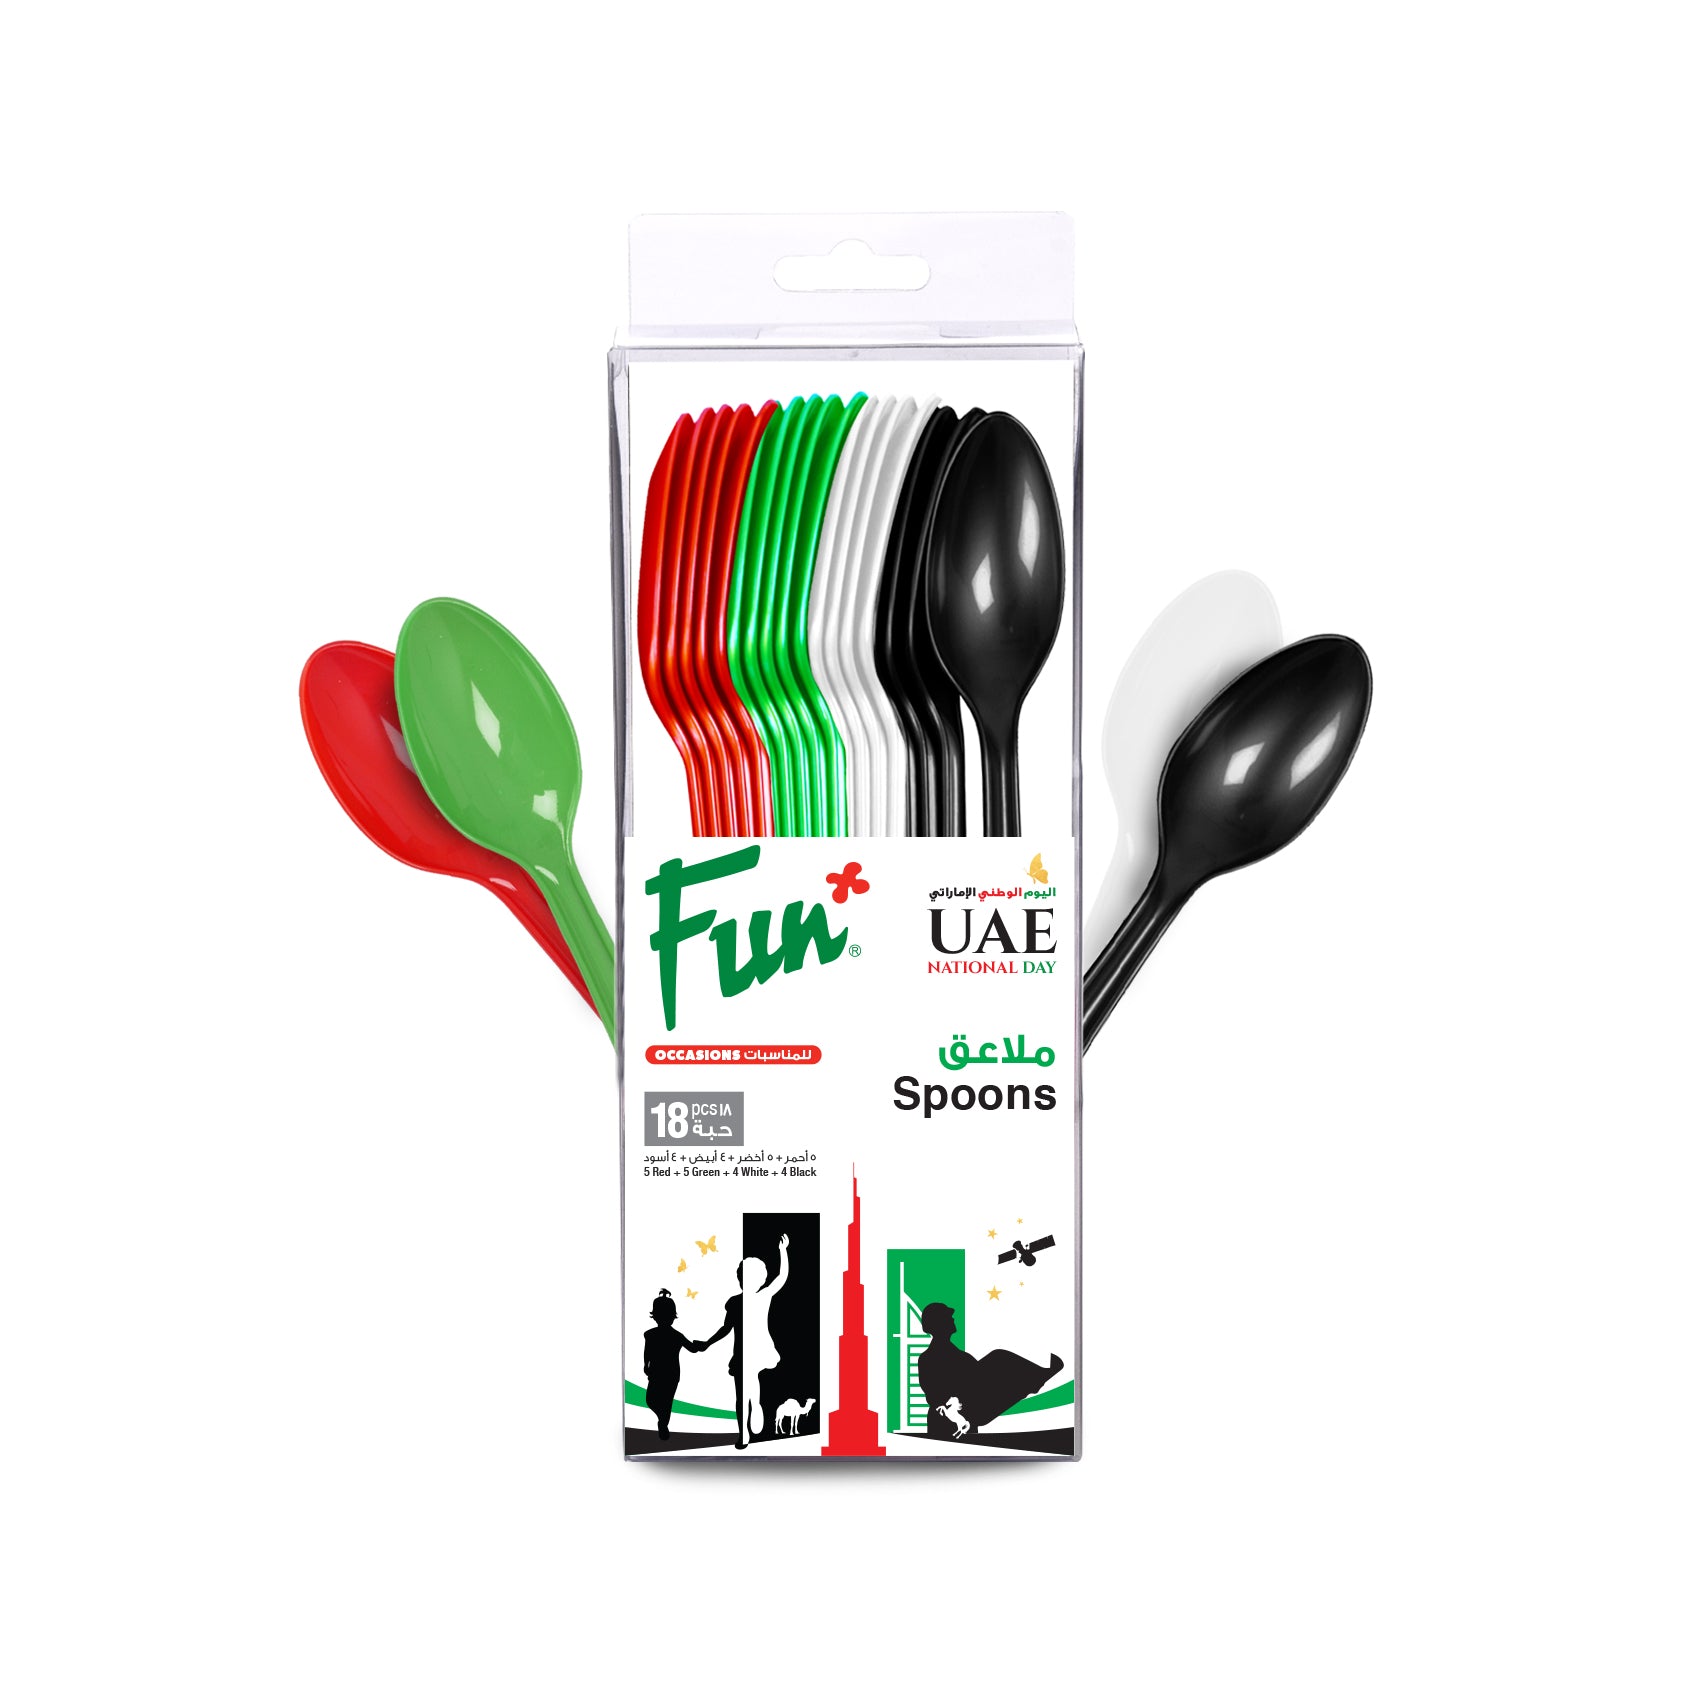 Fun Heavy Duty Plastic Spoon 6.5in - UAE National Day (Pack of 18)